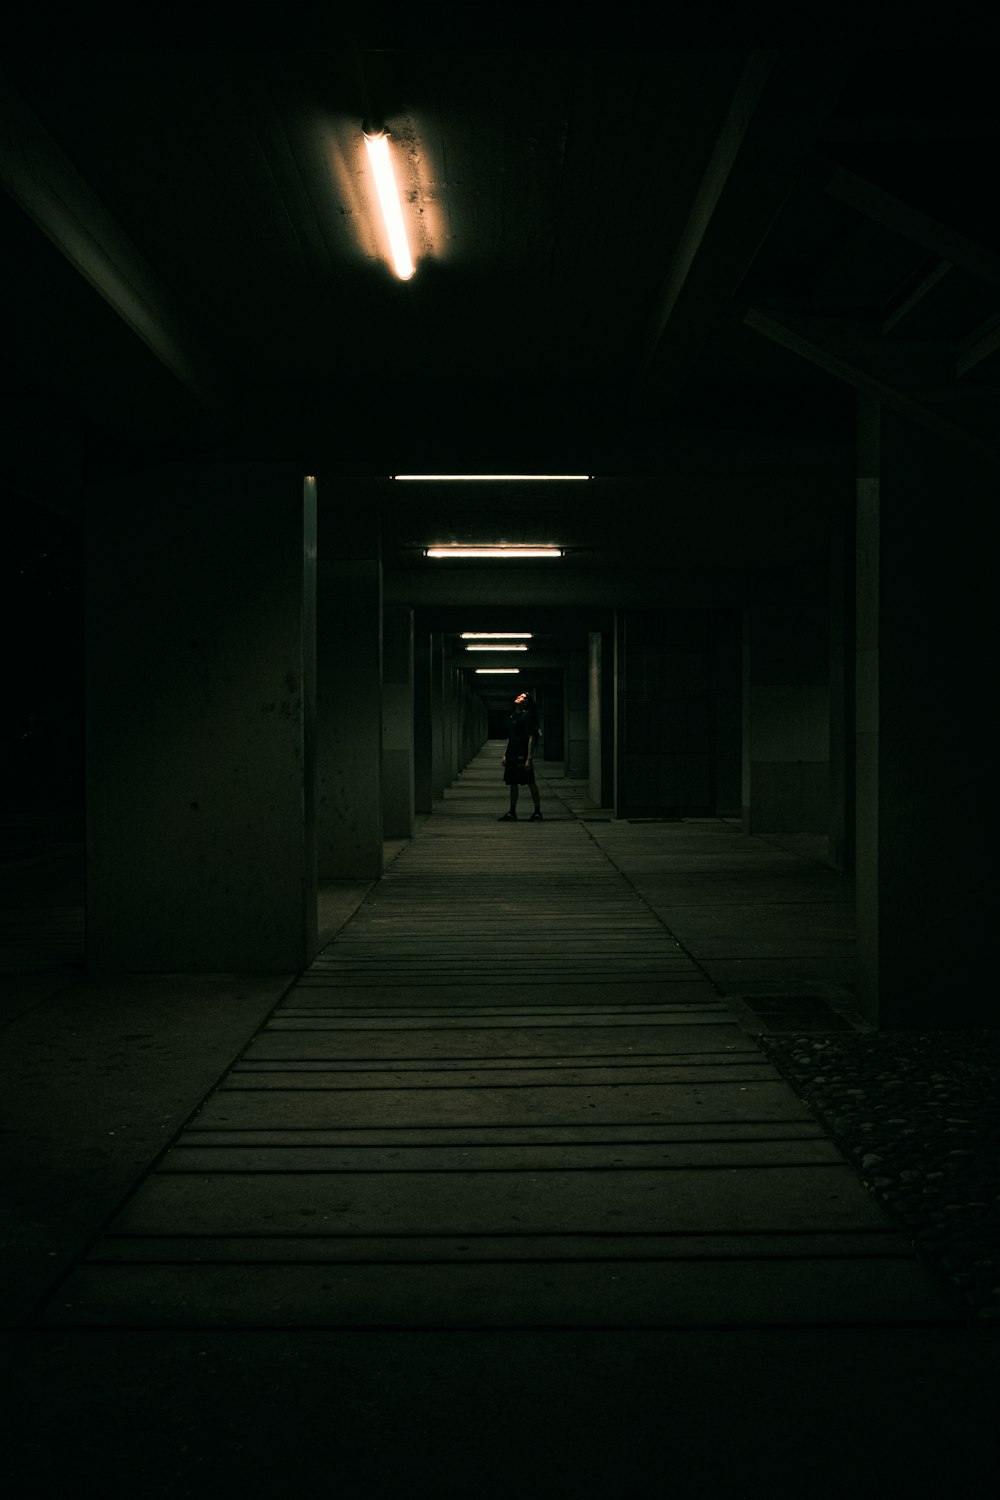 a dark hallway with a person walking down it